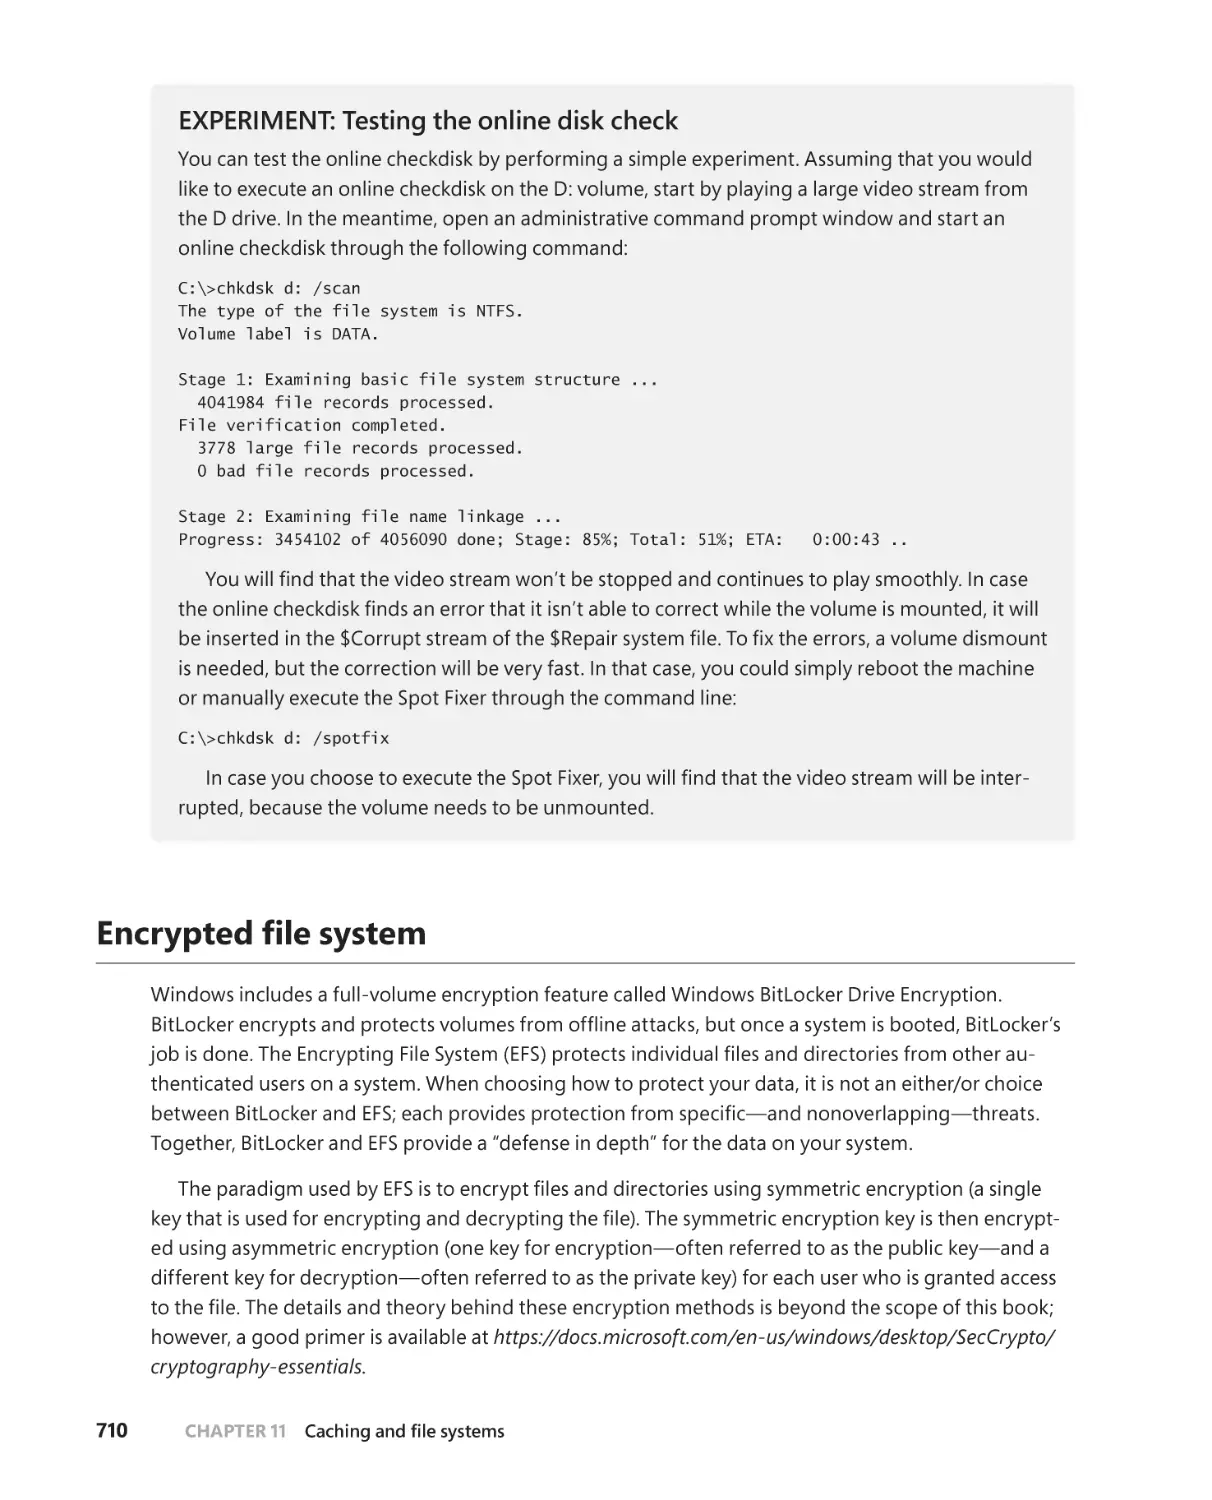 Encrypted file system